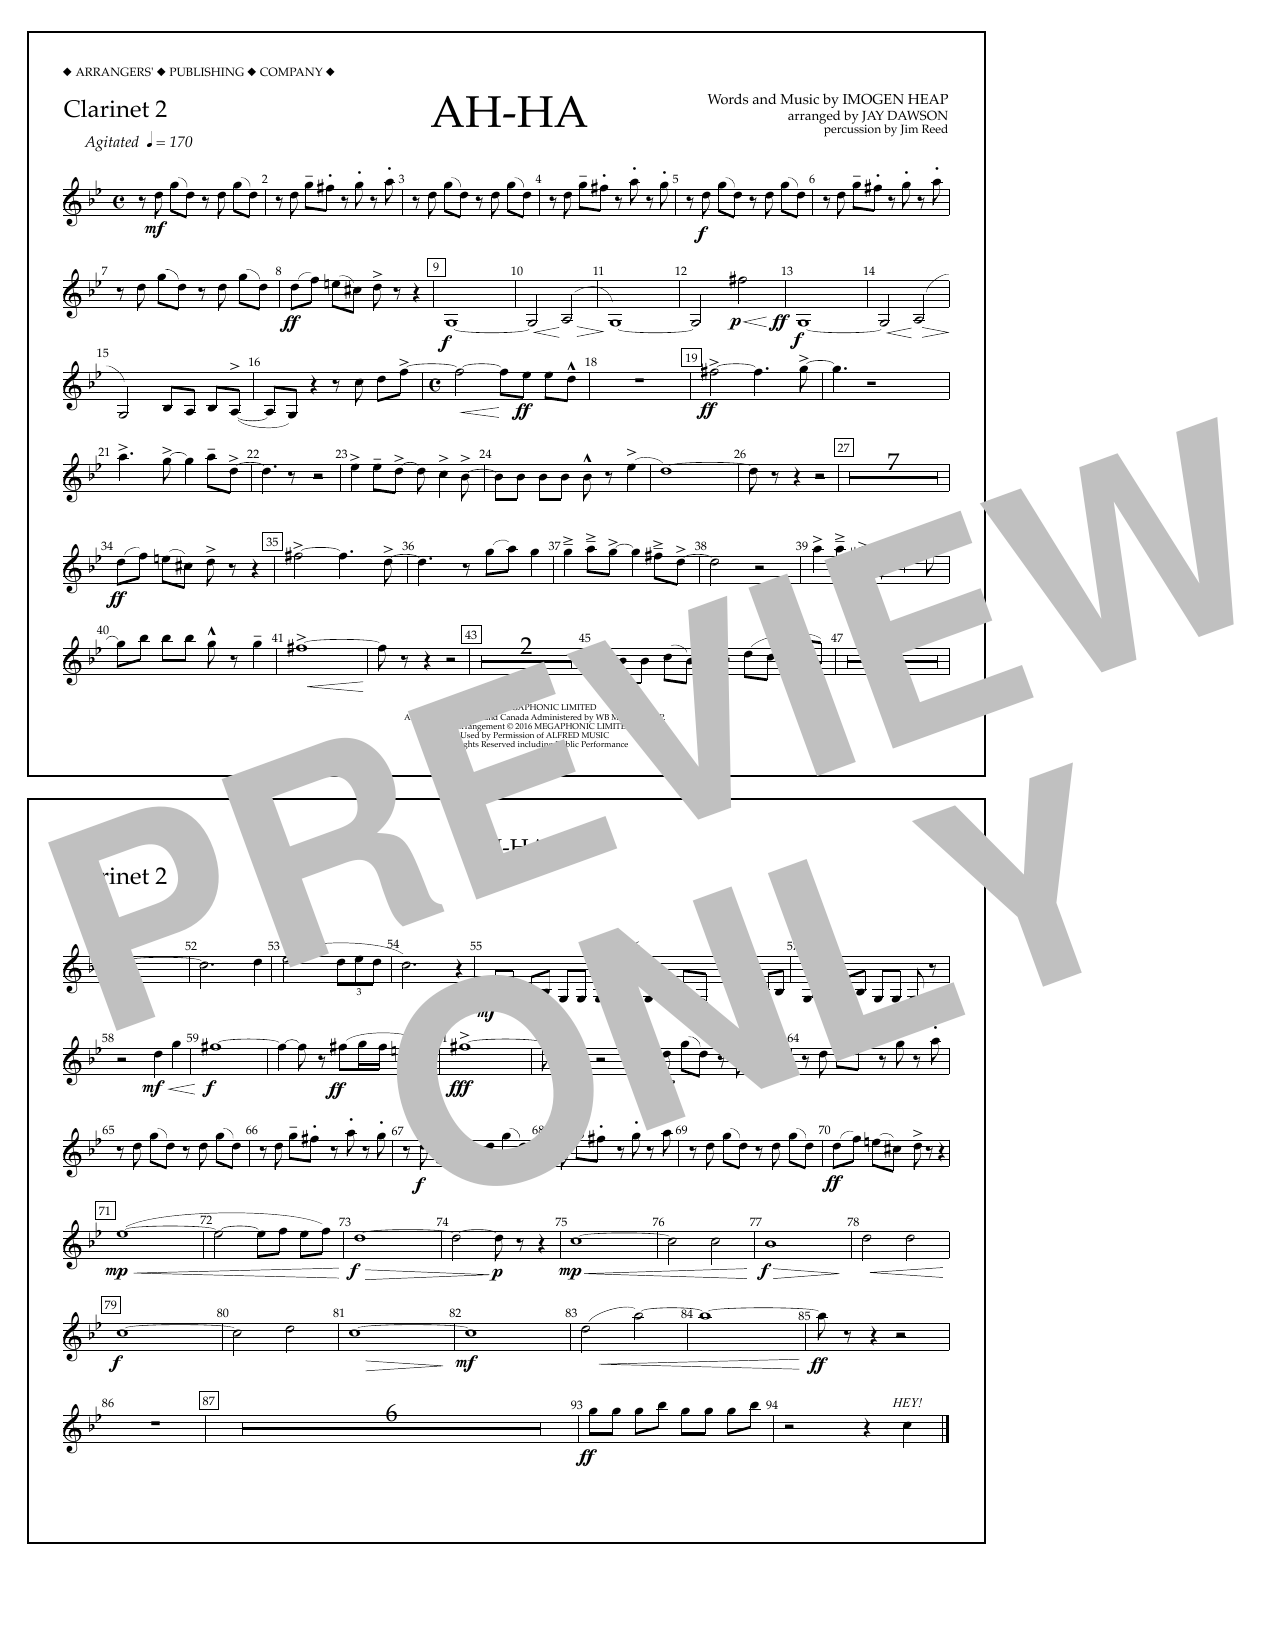 Jay Dawson Ah-ha - Clarinet 2 Sheet Music Notes & Chords for Marching Band - Download or Print PDF